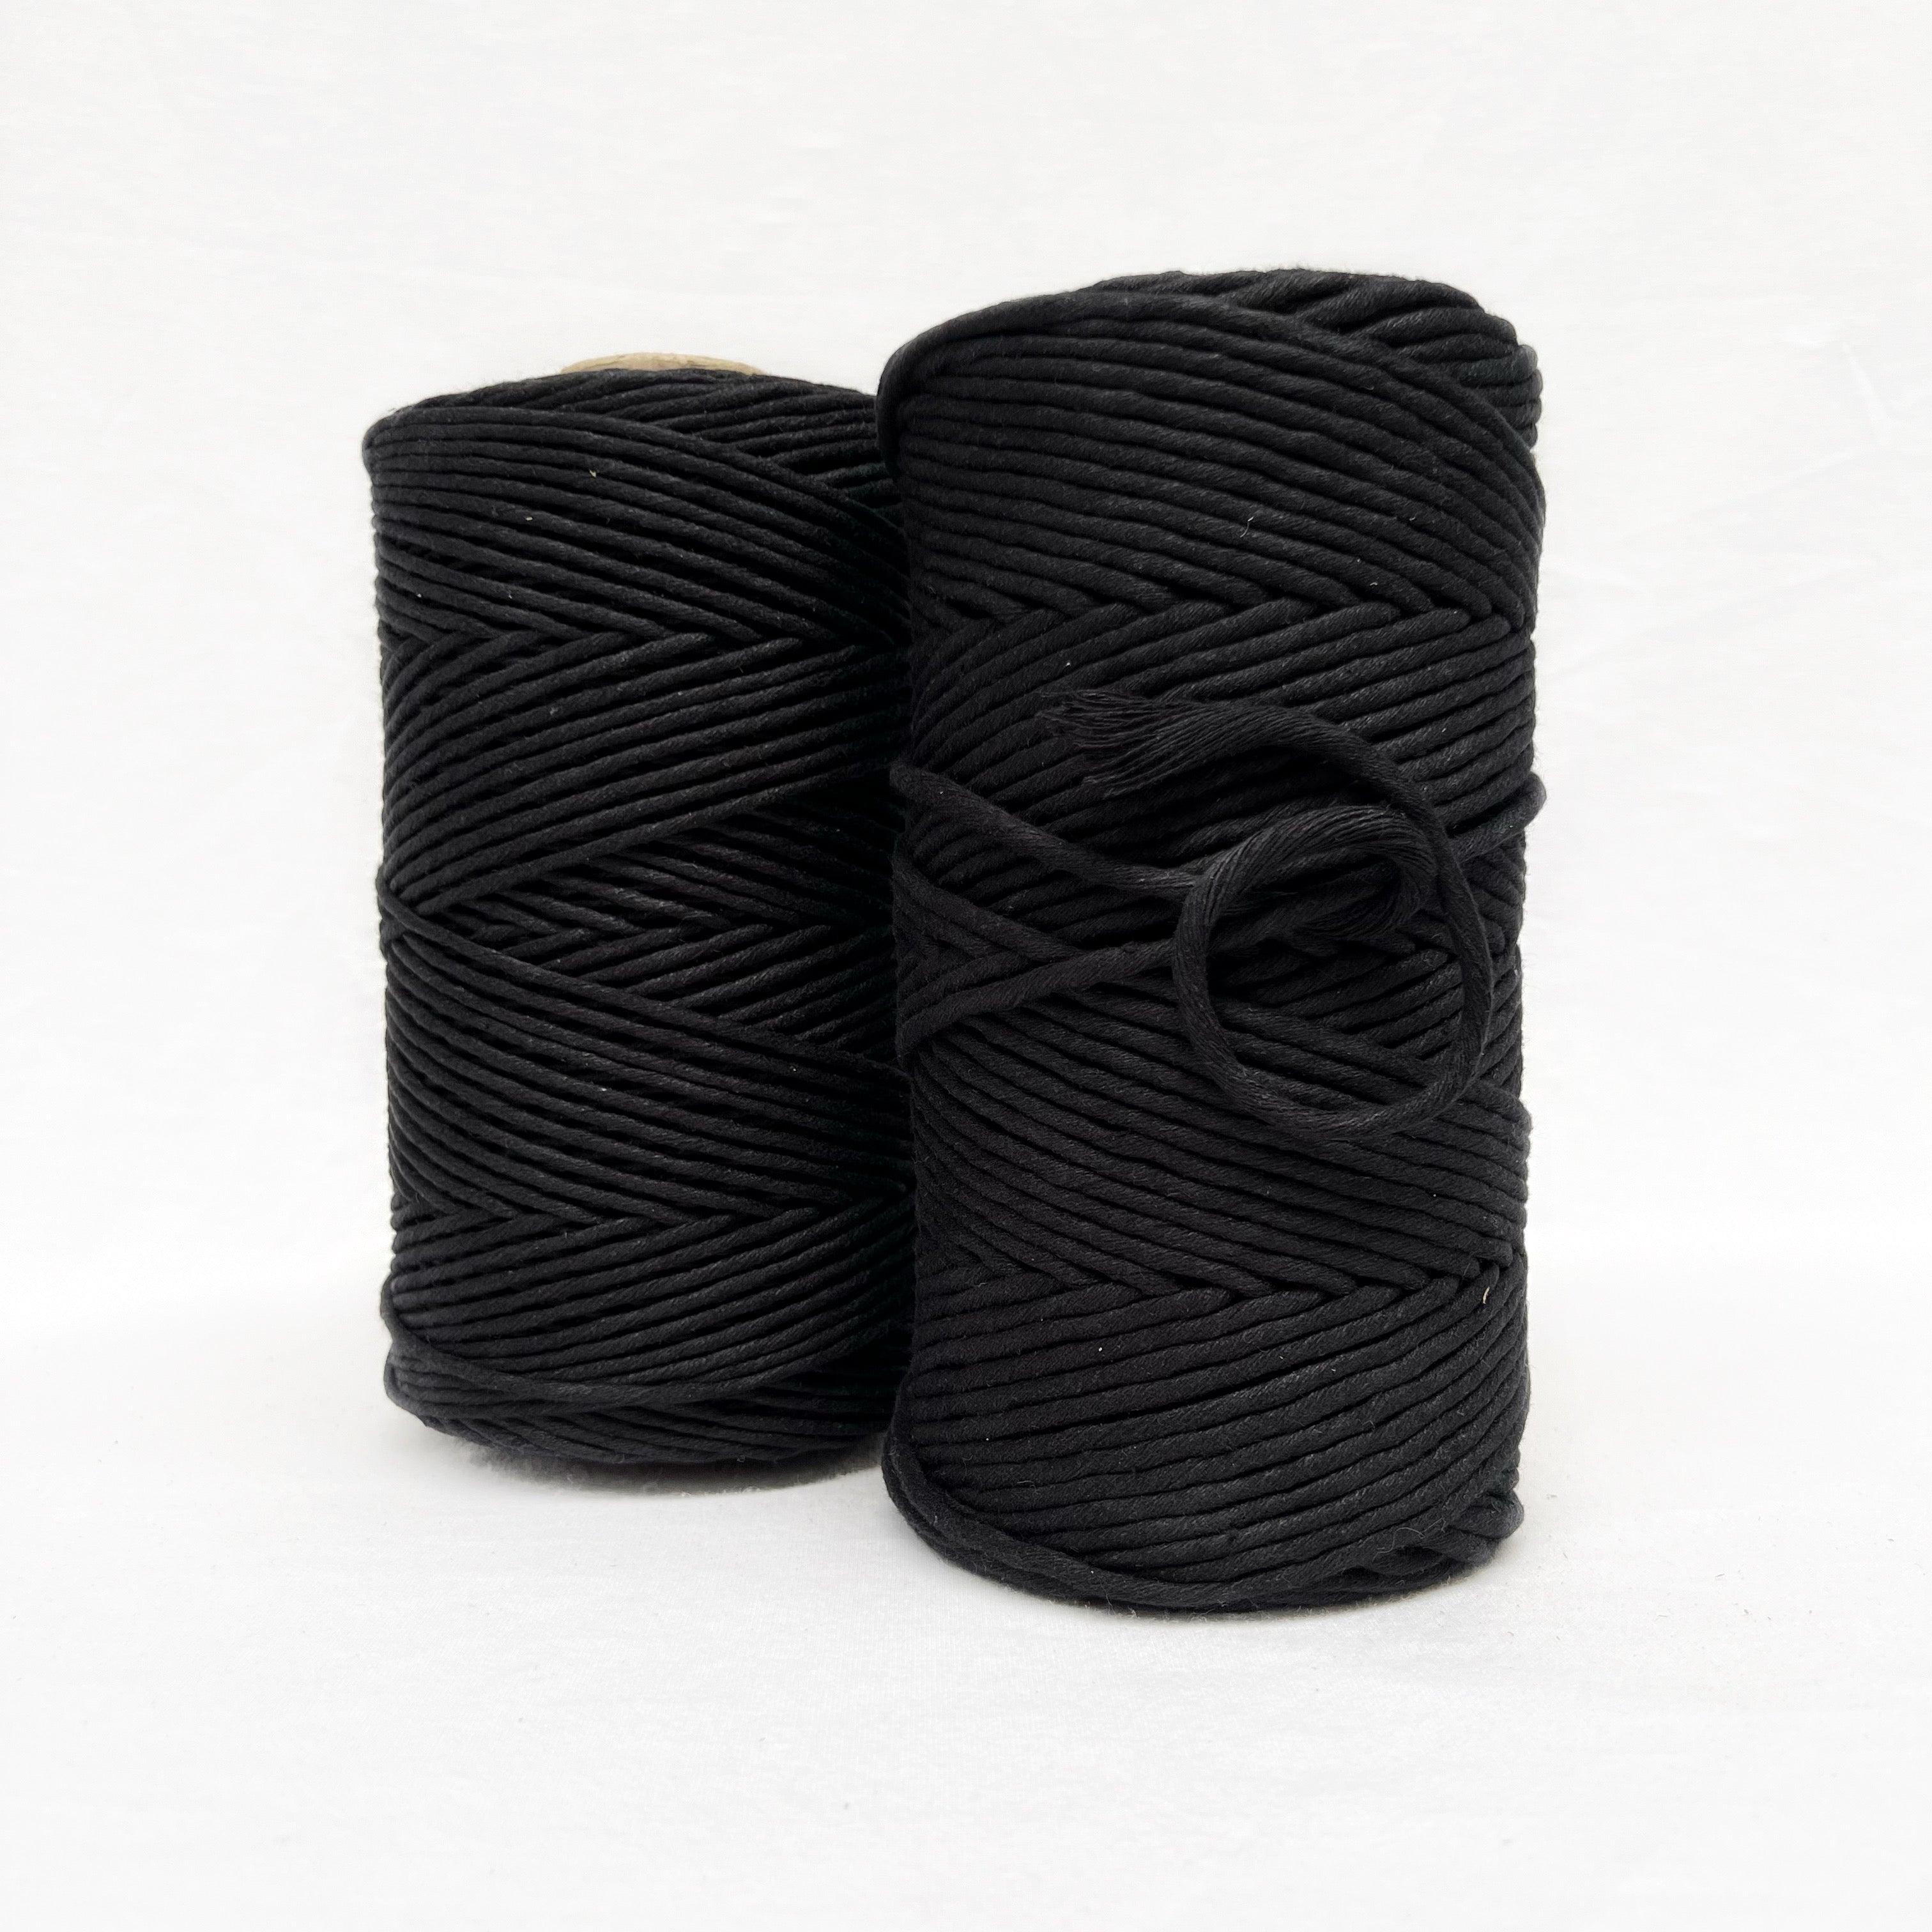 Ravenox Black Cotton Macramé Cord | Natural Cord for Macramé Projects 3 mm x 1,000 Yards